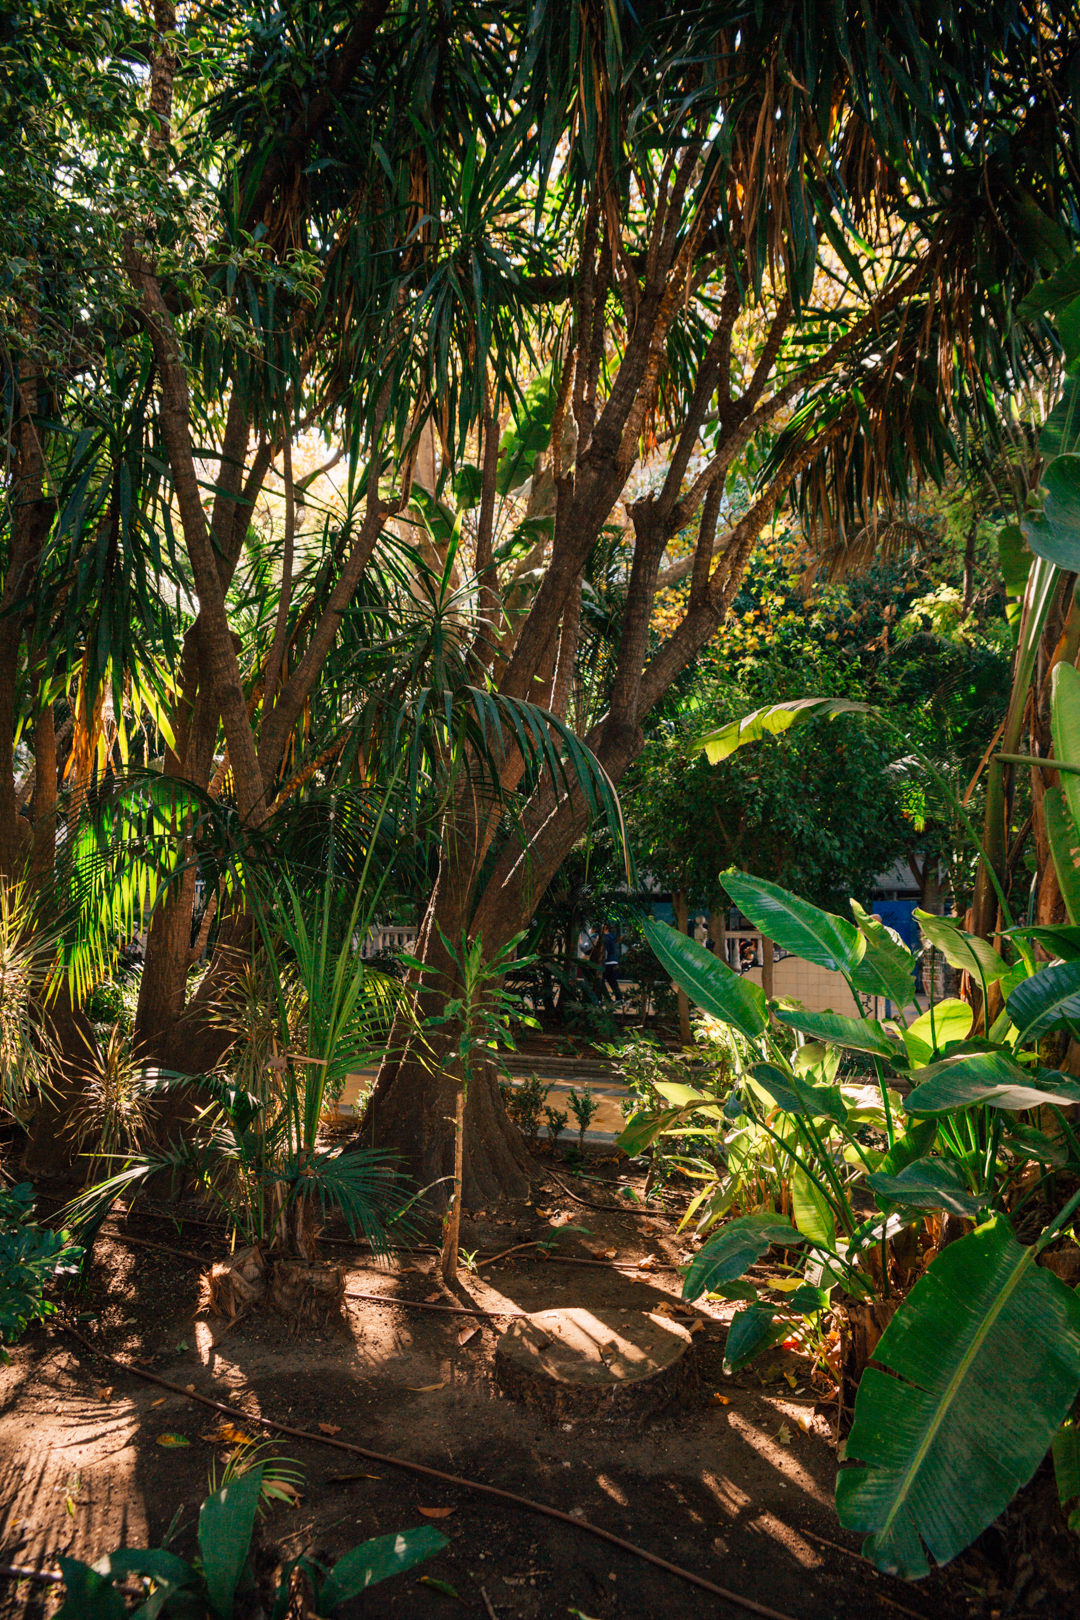 details of plants and trees at Parque de la Alameda, Marbella, Spain